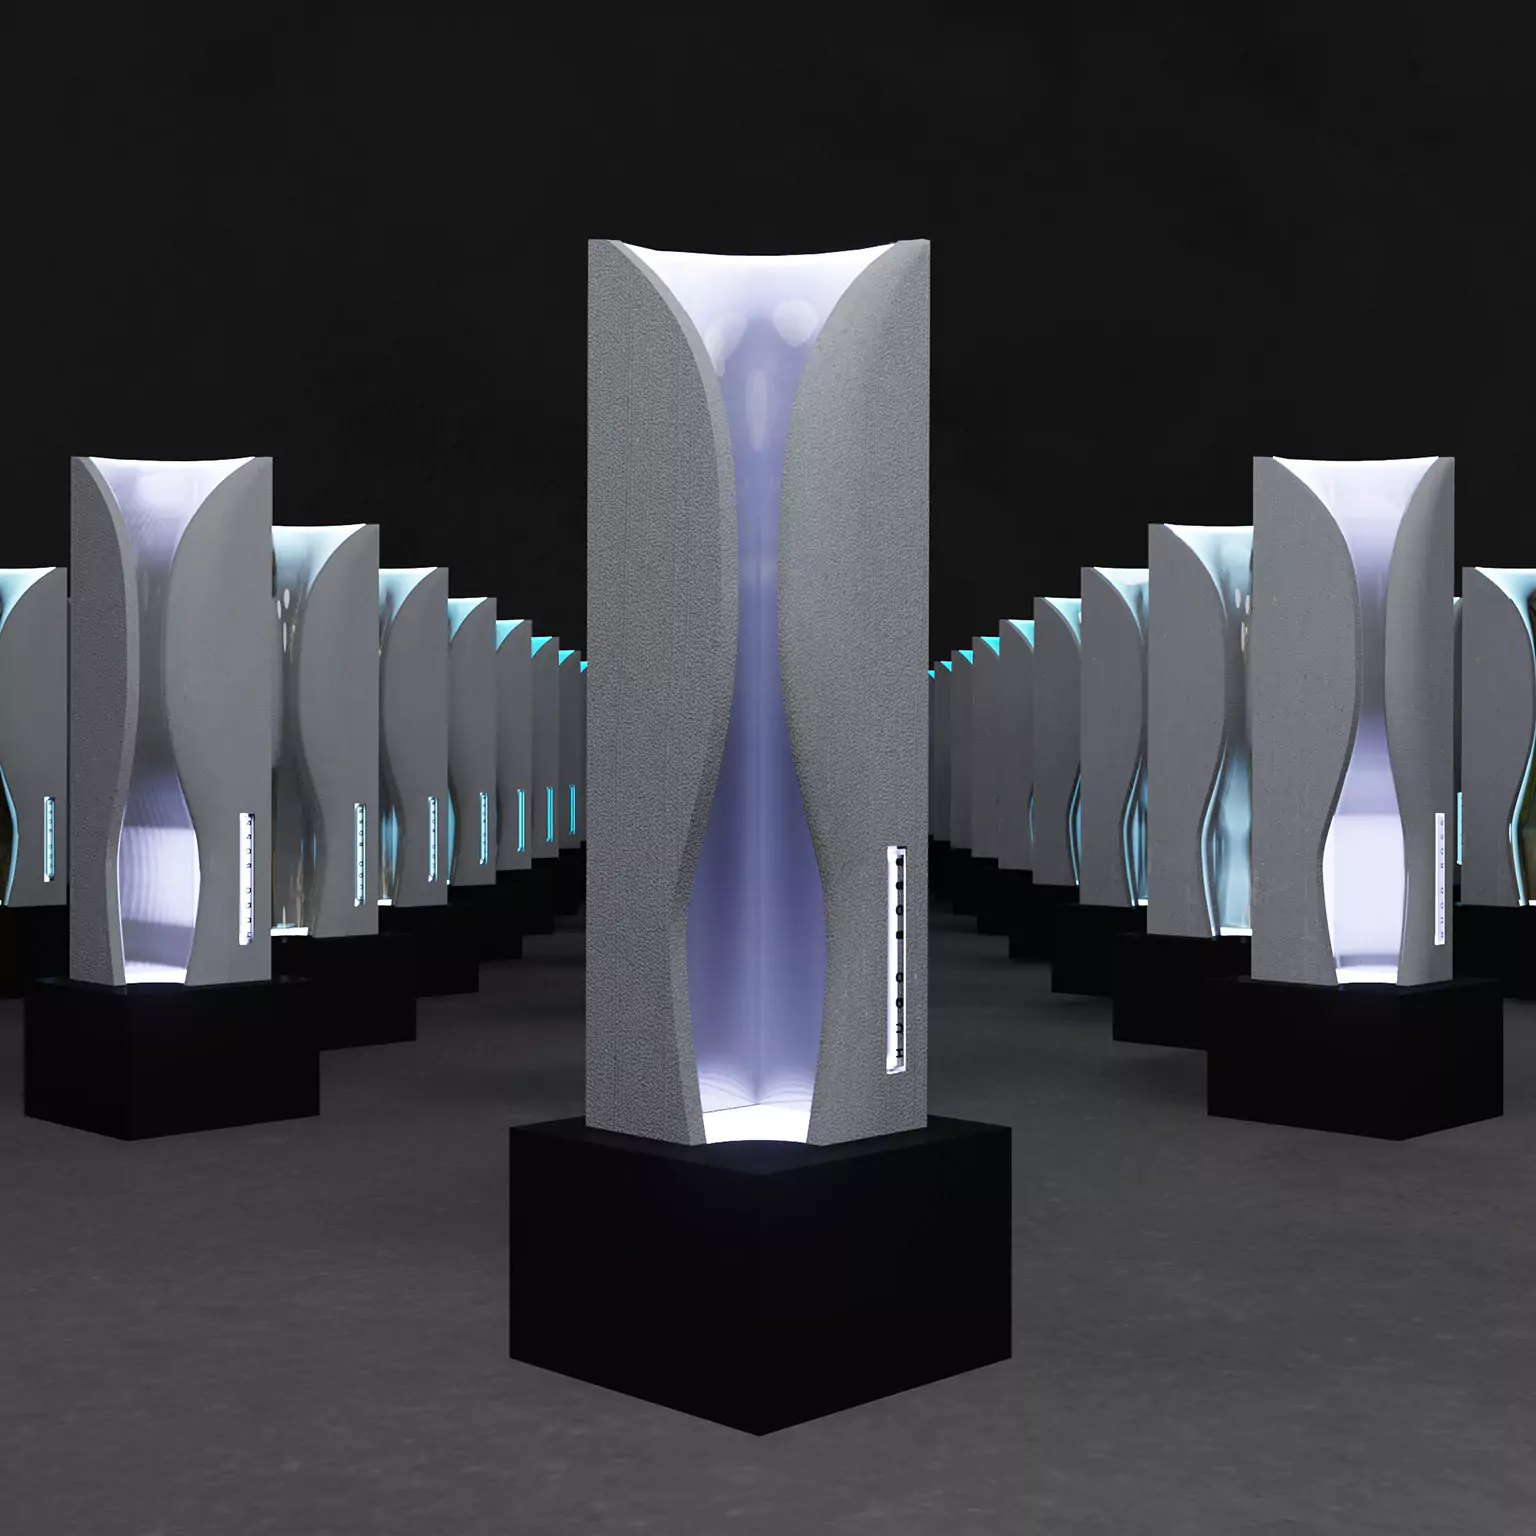 Hugo Boss Million Euro Club Awards Trophy